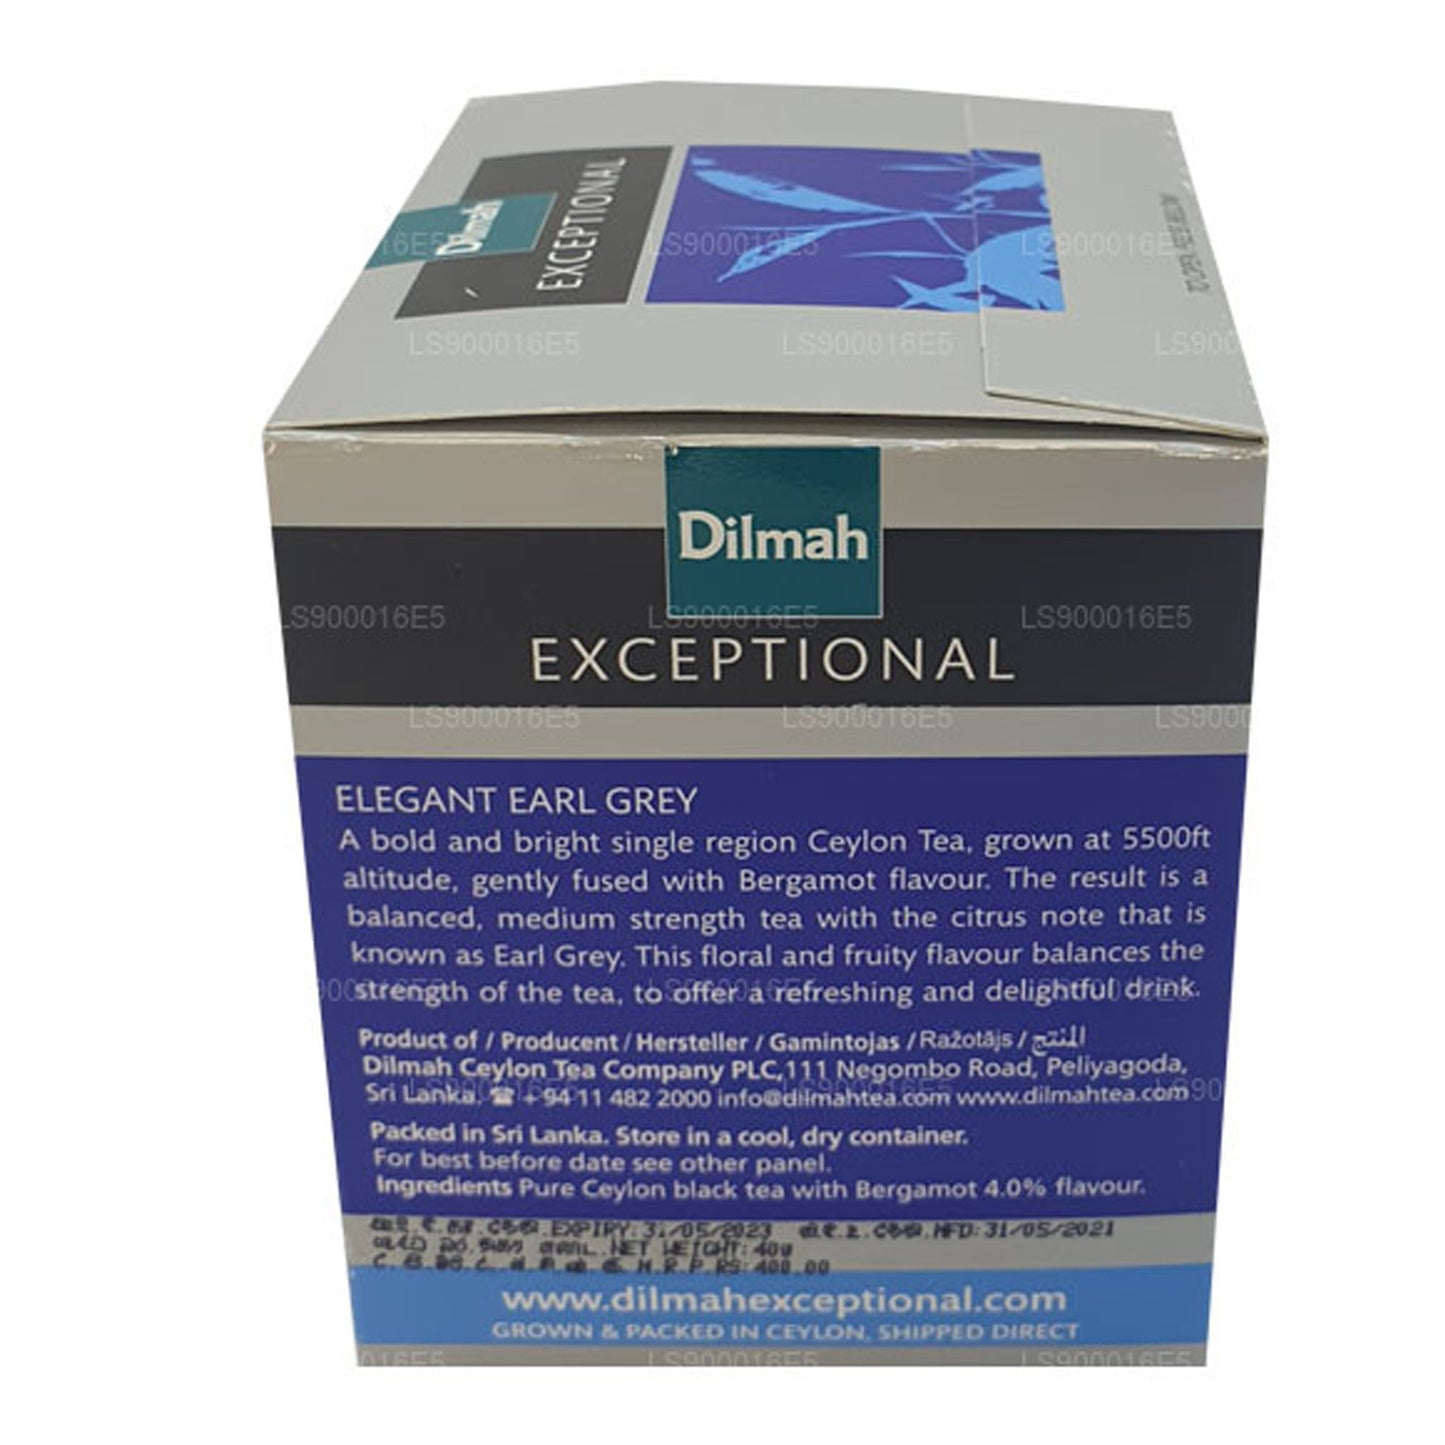 Dilmah Exceptional Elegant Earl Grey Real Leaf Tea (40 g), 20 bustine